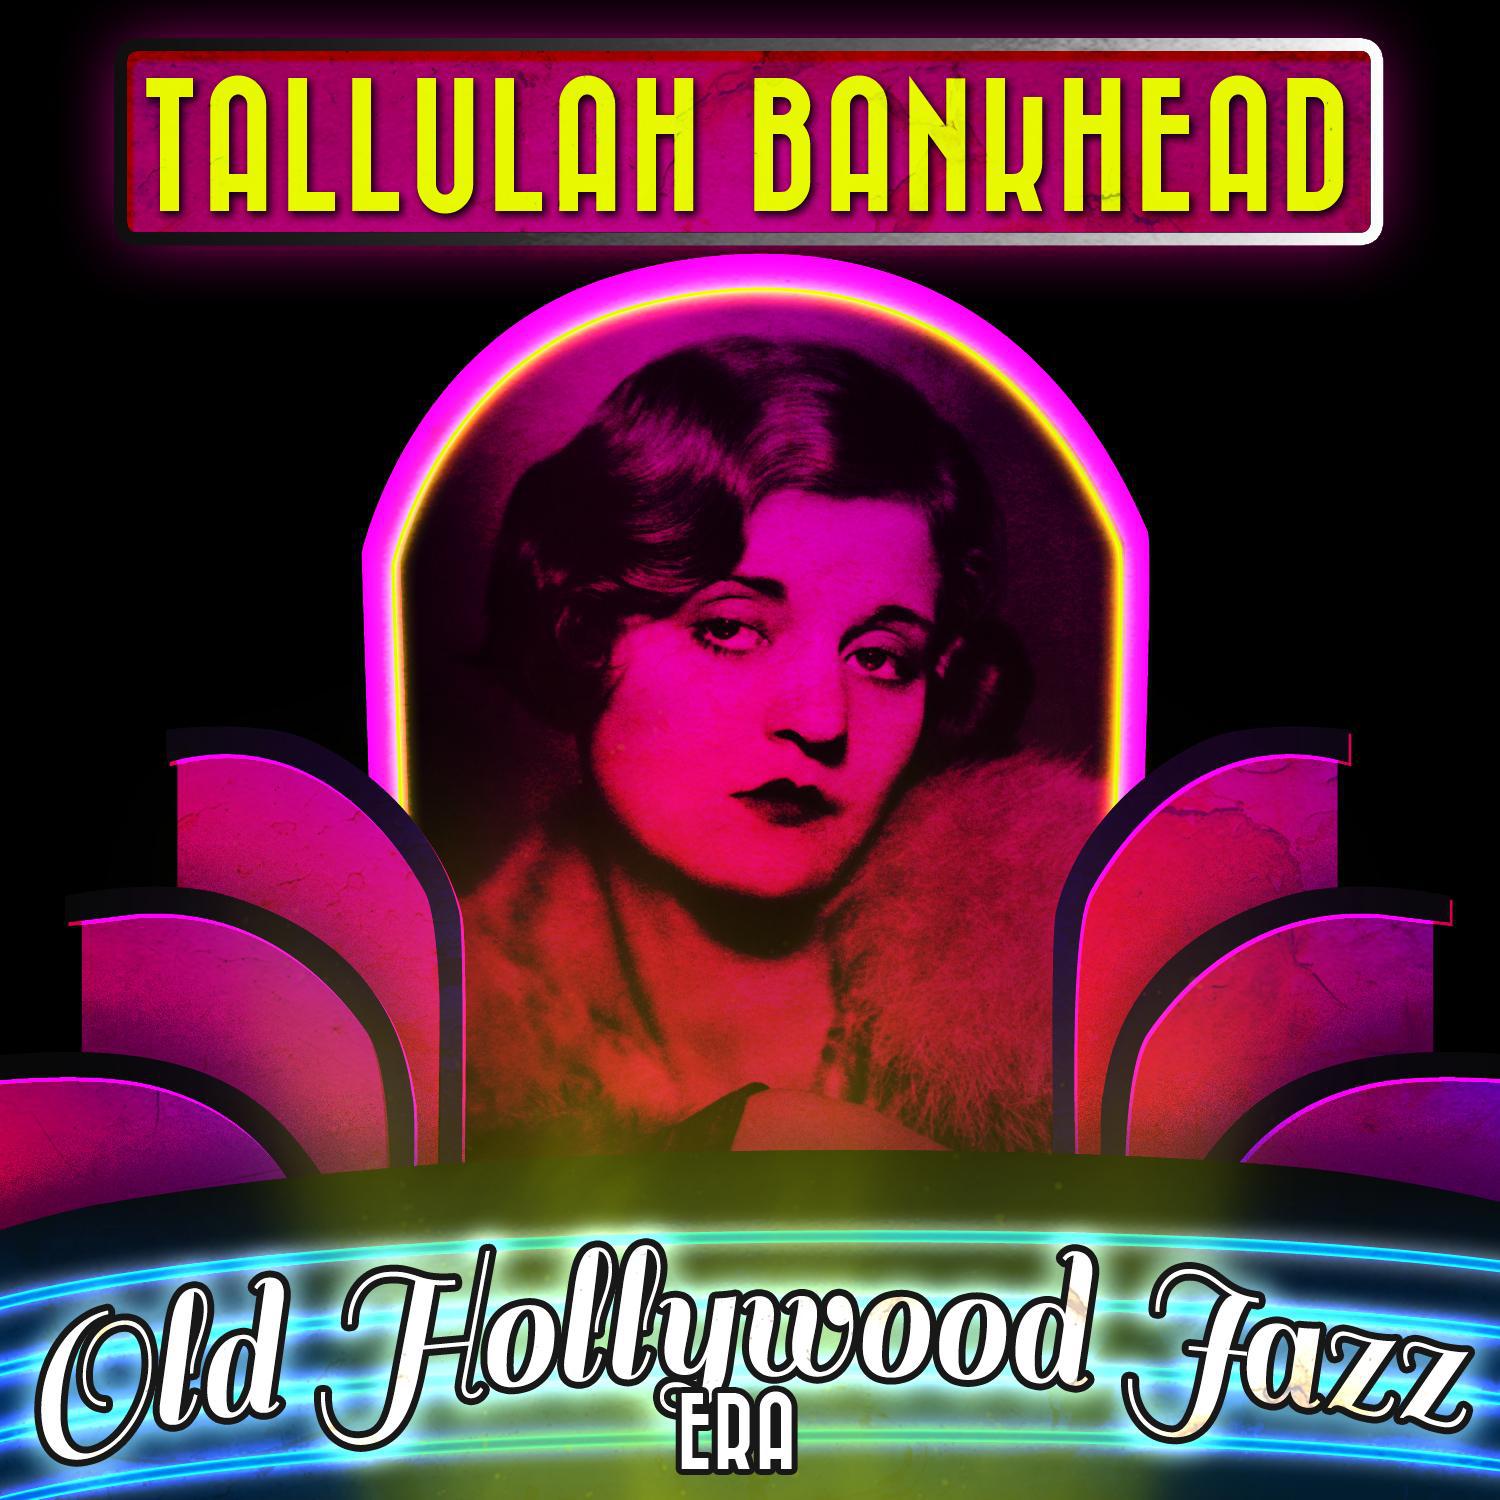 Tallulah Bankhead - The Big Show, Pt. 1